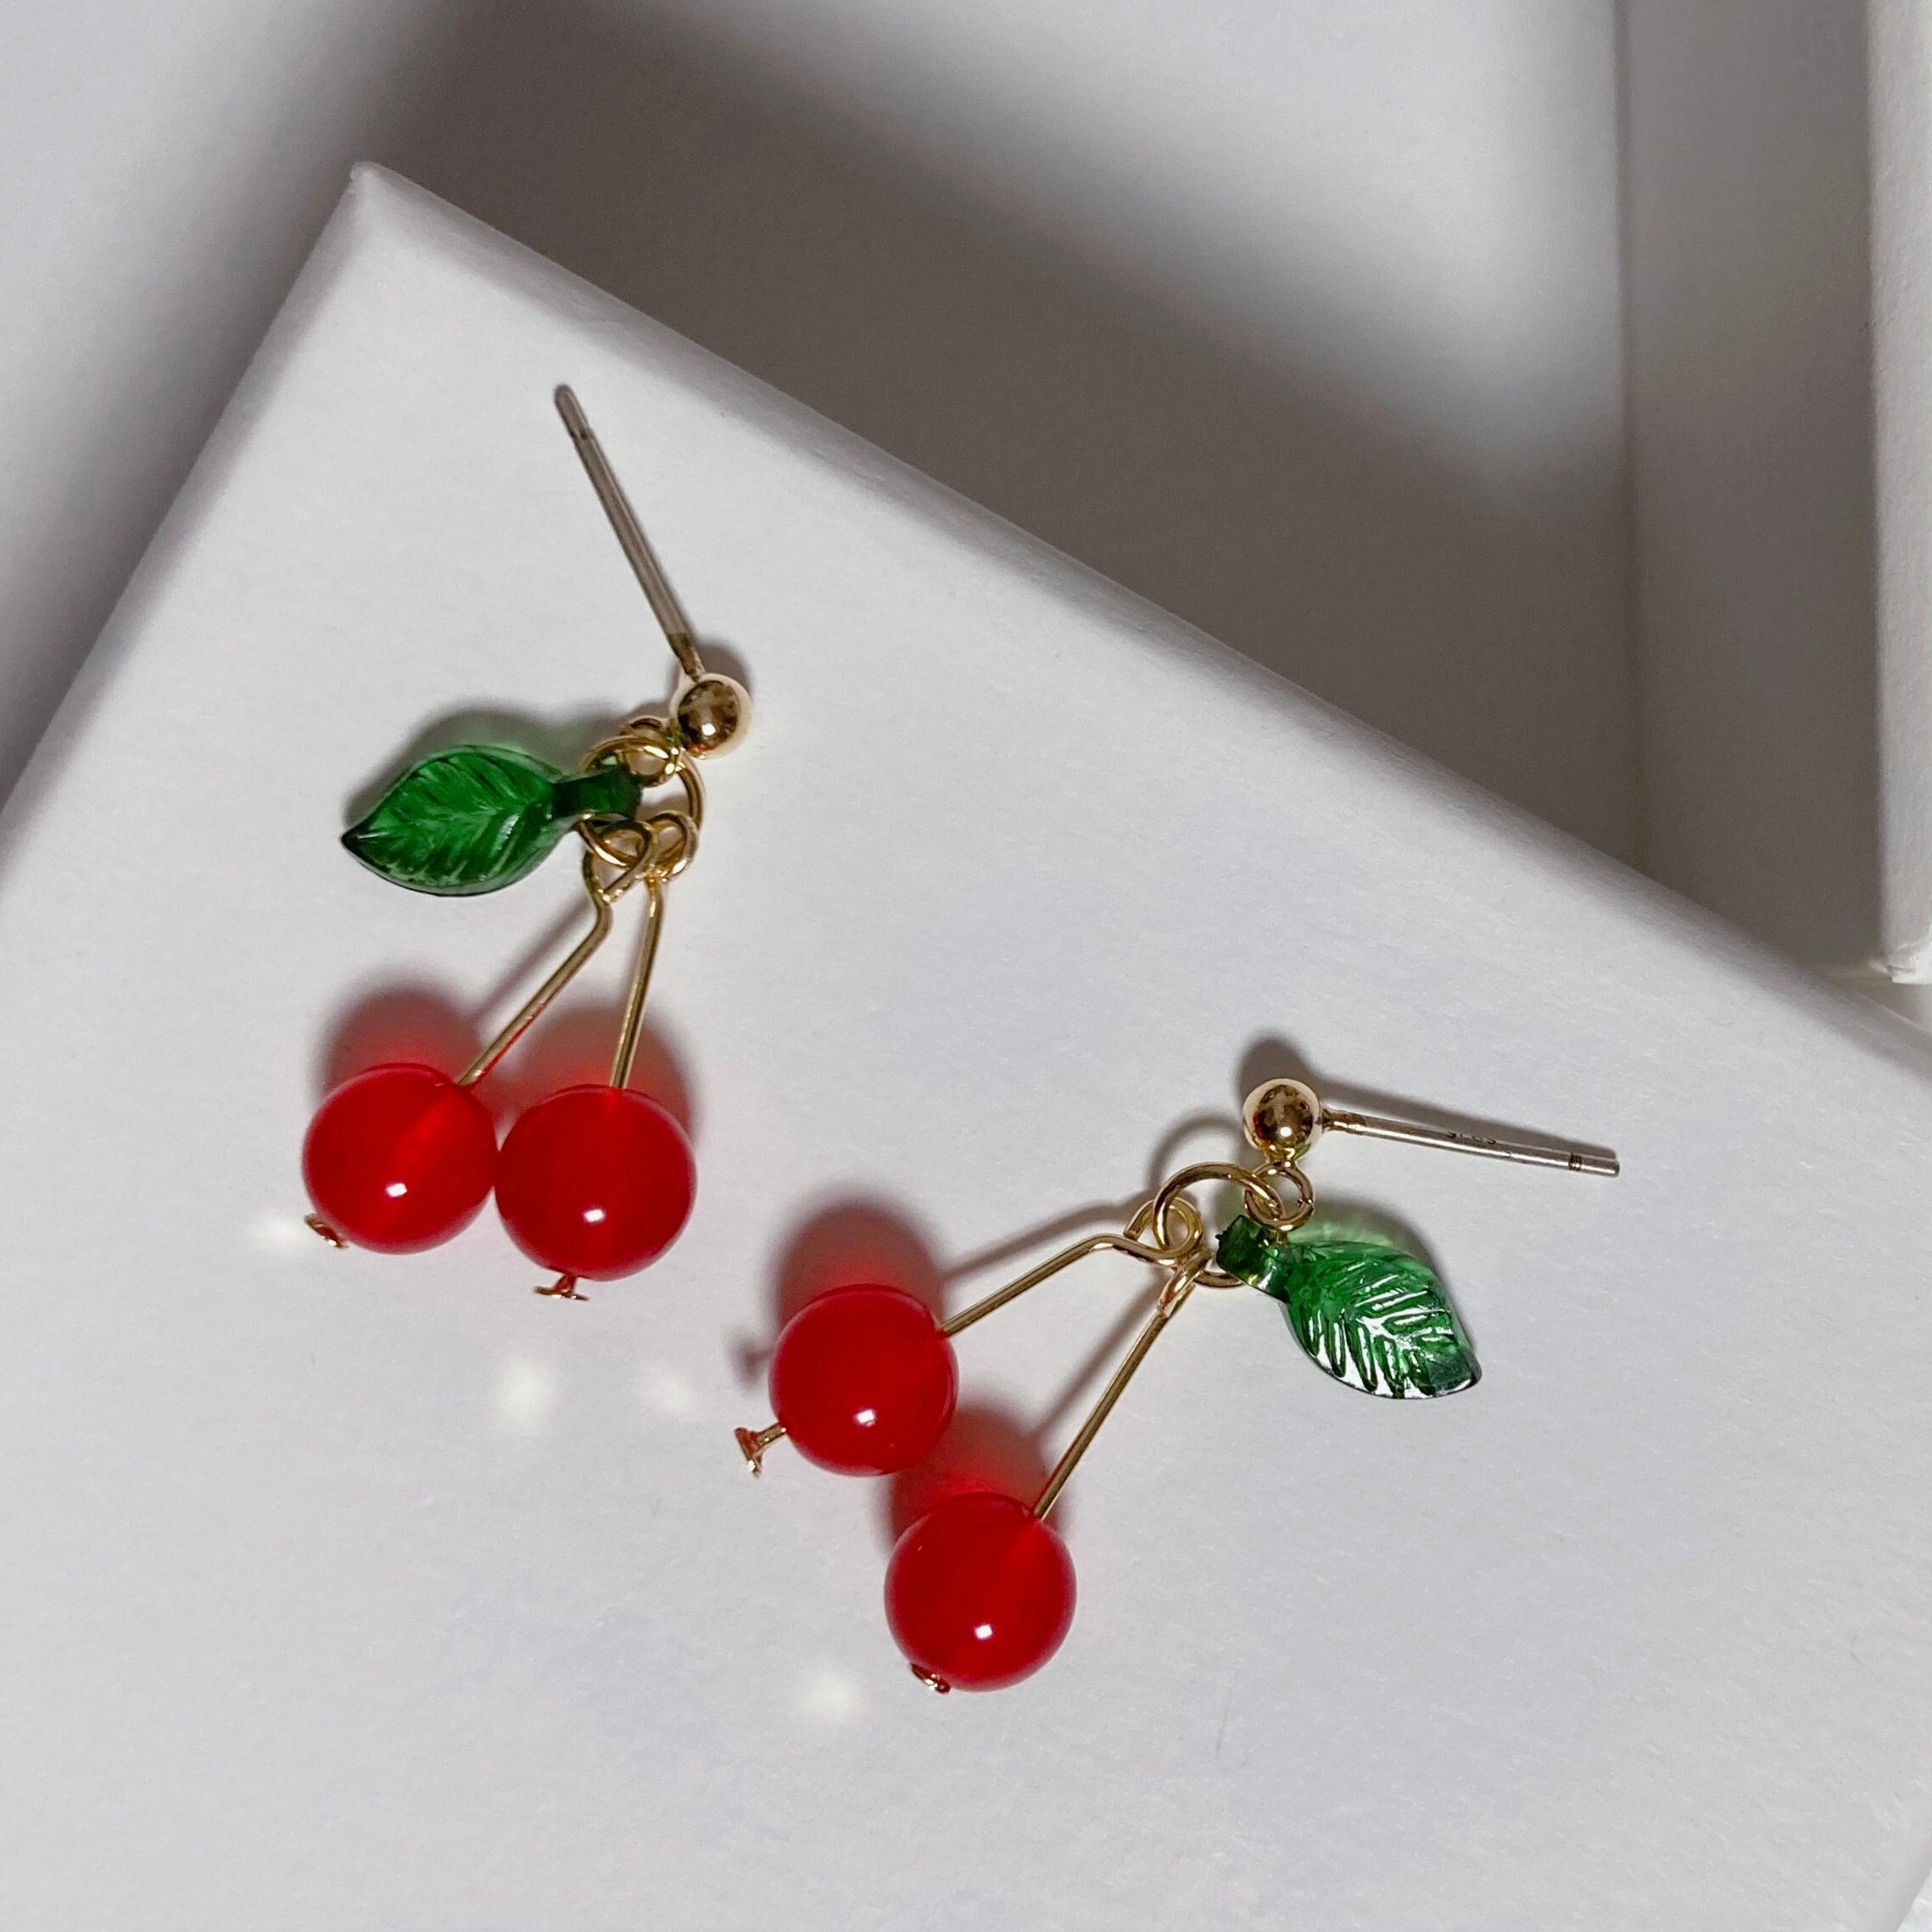 Accessories for Women Red Cherry Earrings for Women Fruit Statement Dangle  Earring Wedding Party Korean Jewelry